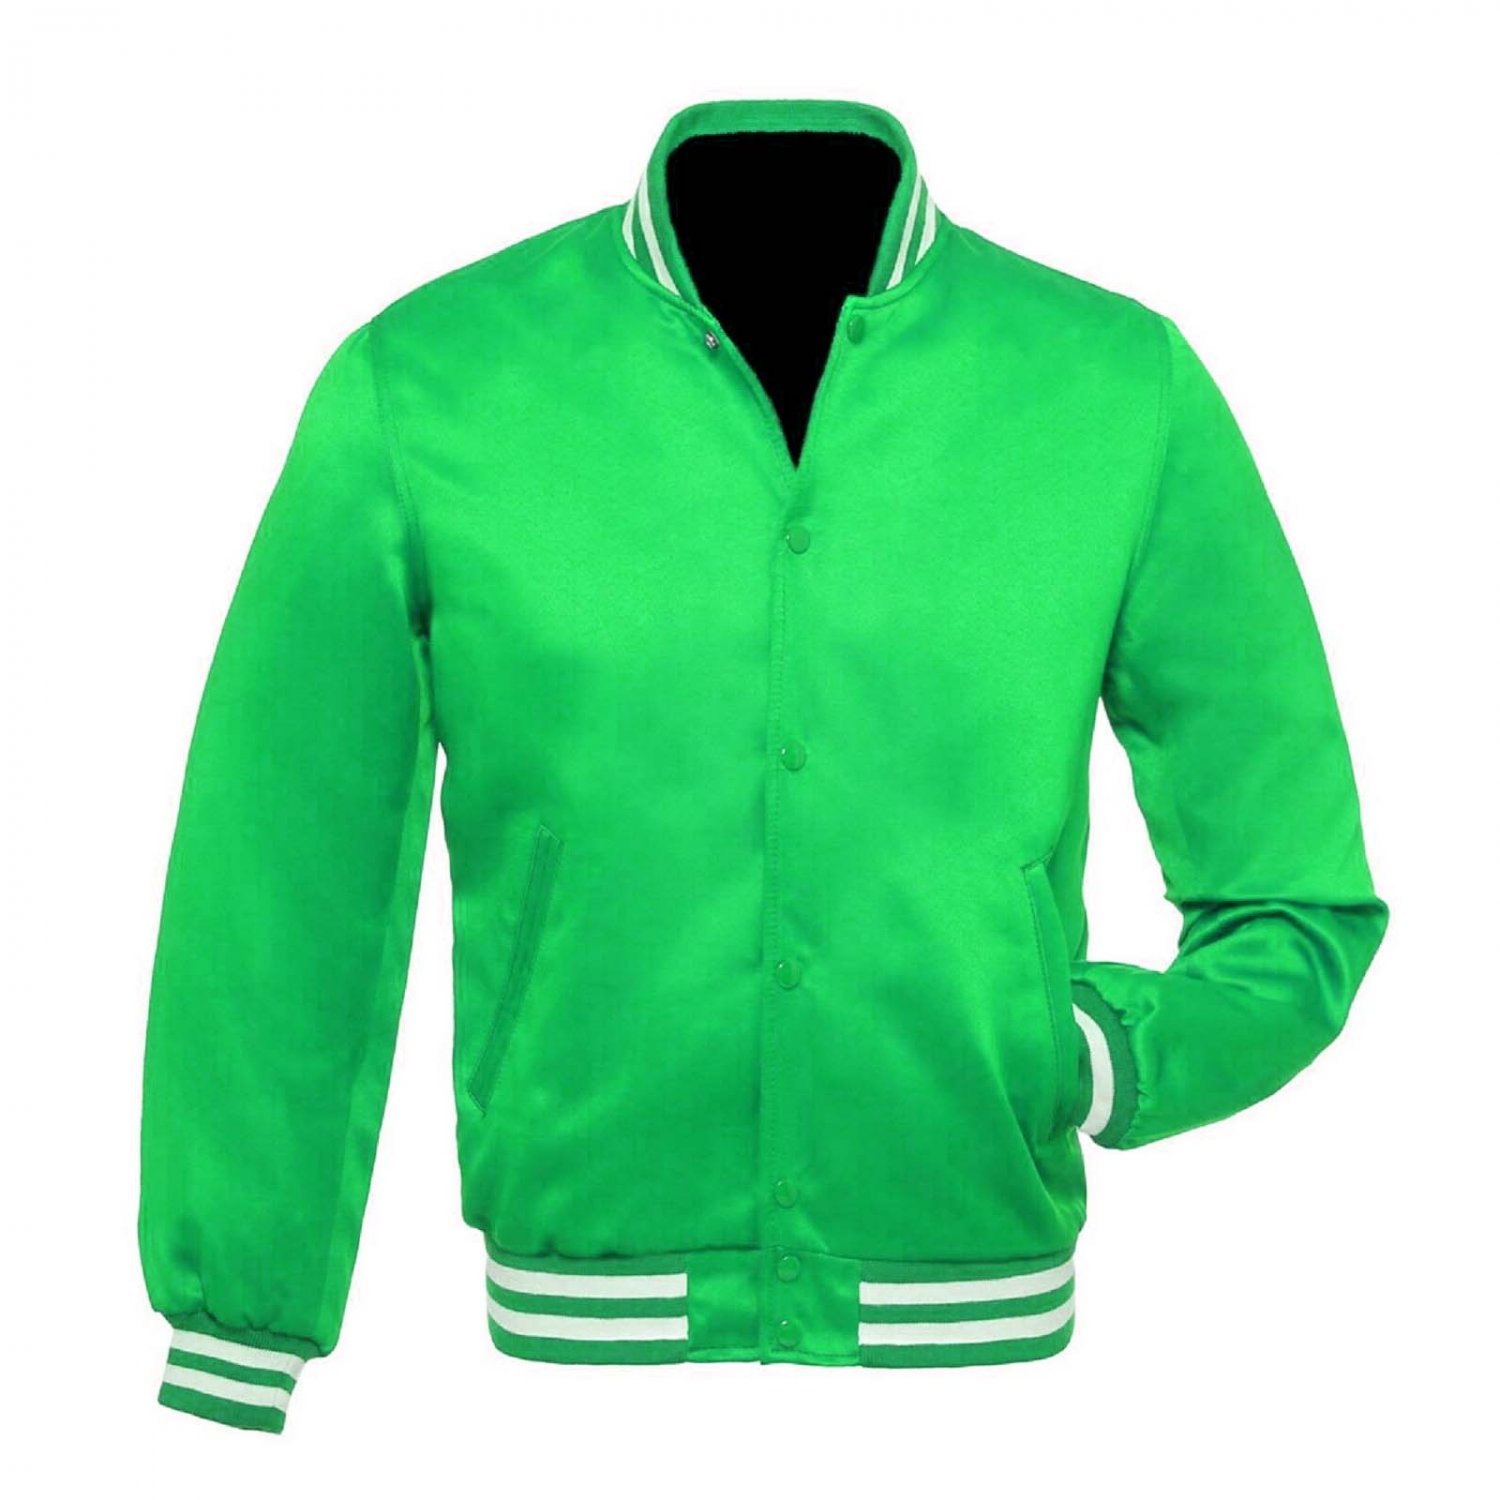 New Satin Baseball Collage Green varsity Bomber jacket White Trim size S